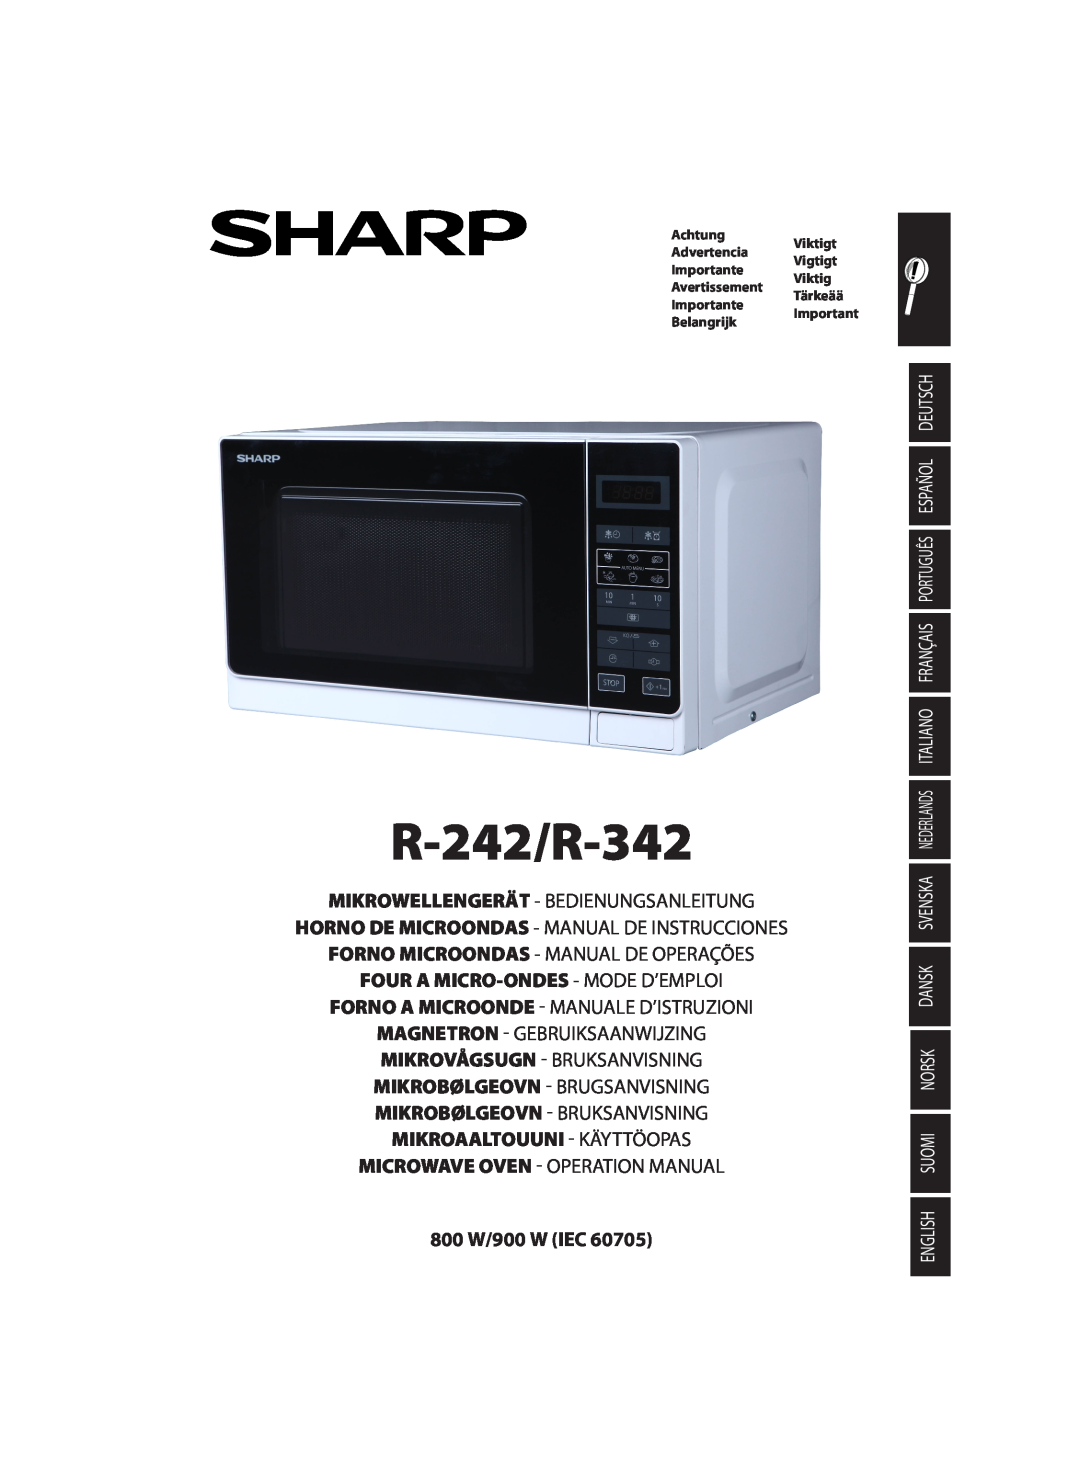 Sharp operation manual R-242/R-342, Mikrowellengerät - Bedienungsanleitung, Forno Microondas - Manual De Operações 